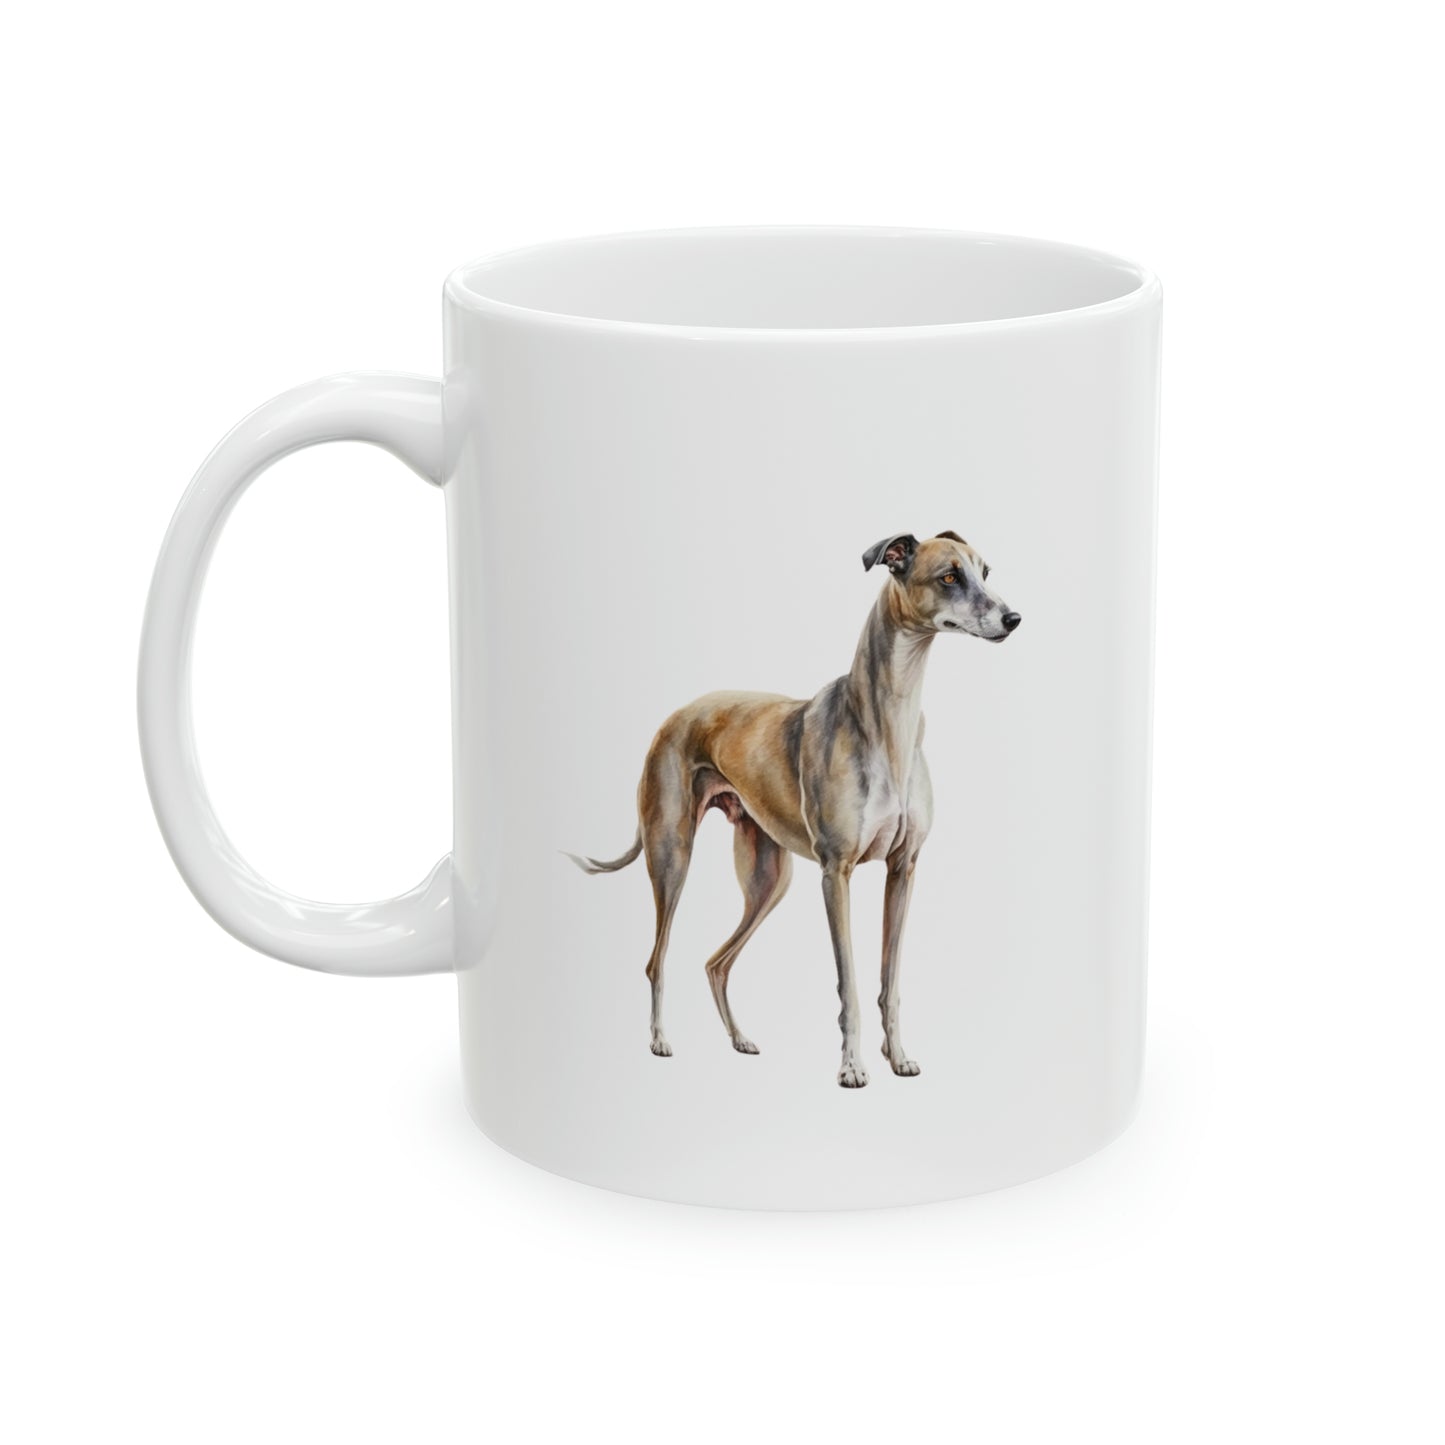 Greyhound "Love Language" | Ceramic Mug 11oz